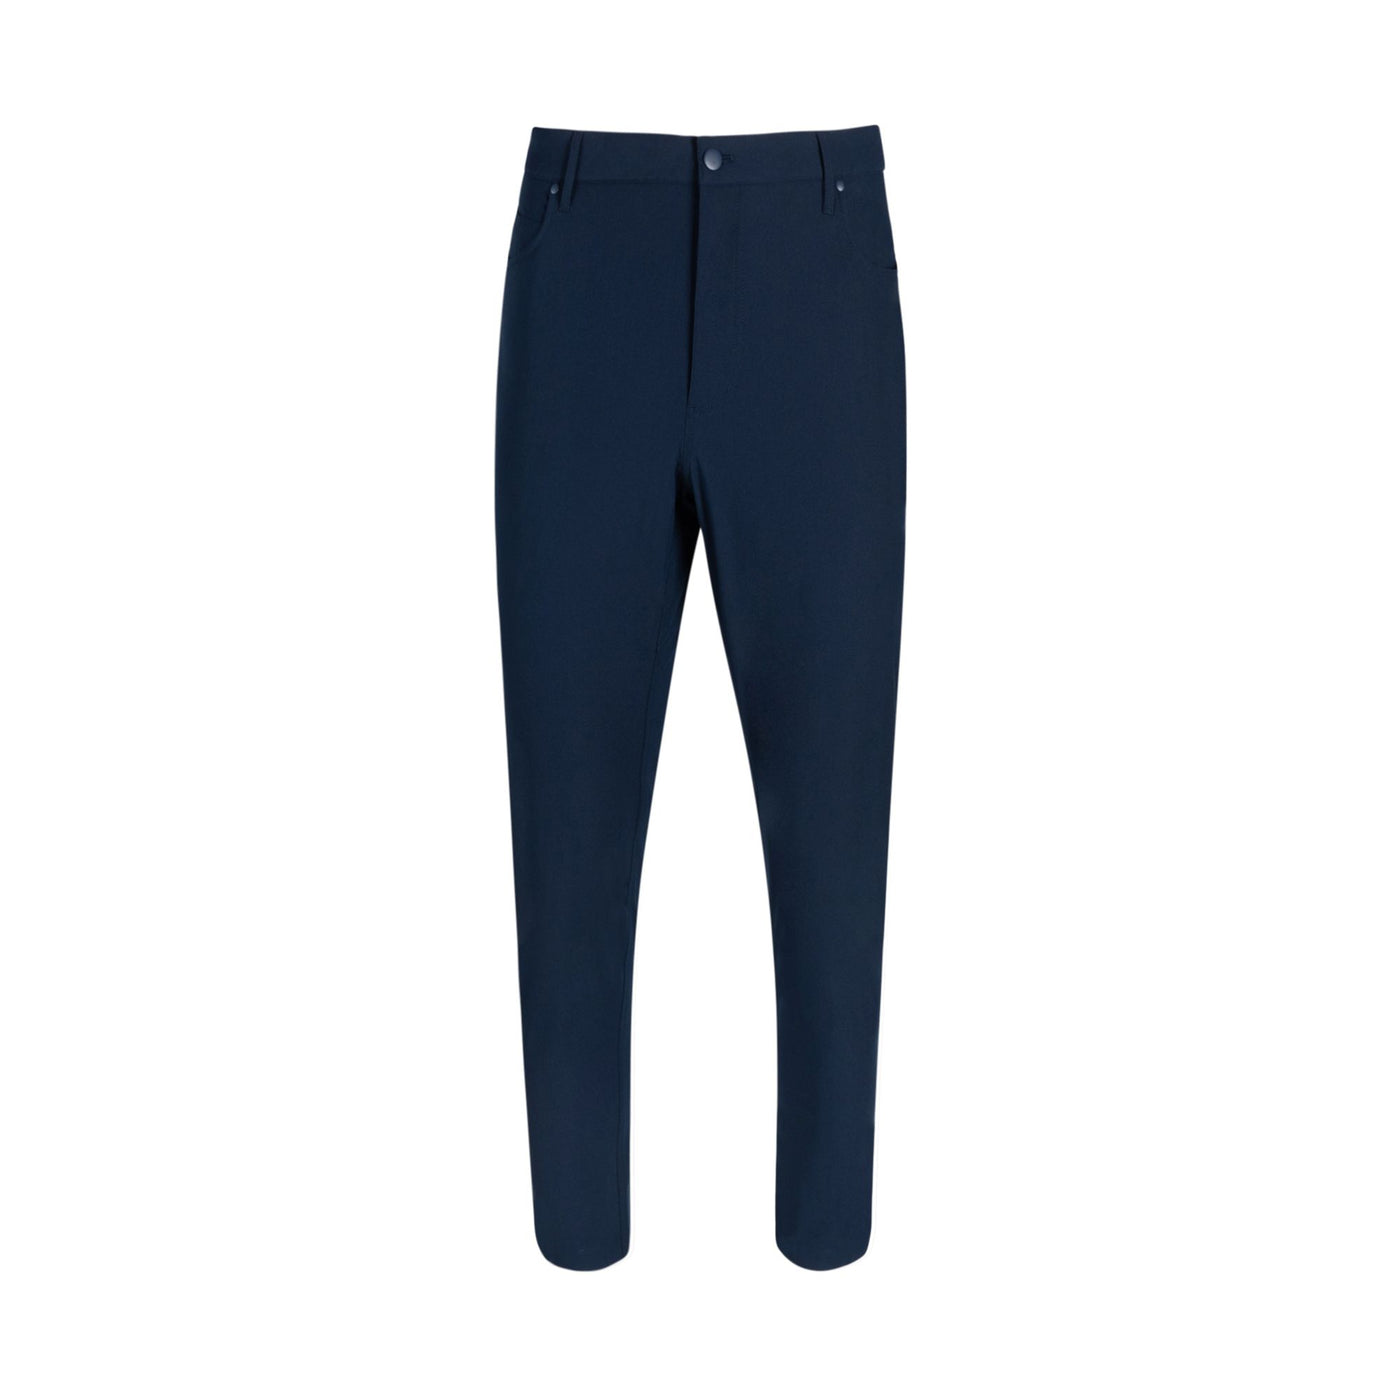 Men's 5-Pocket Performance Pants - Blue